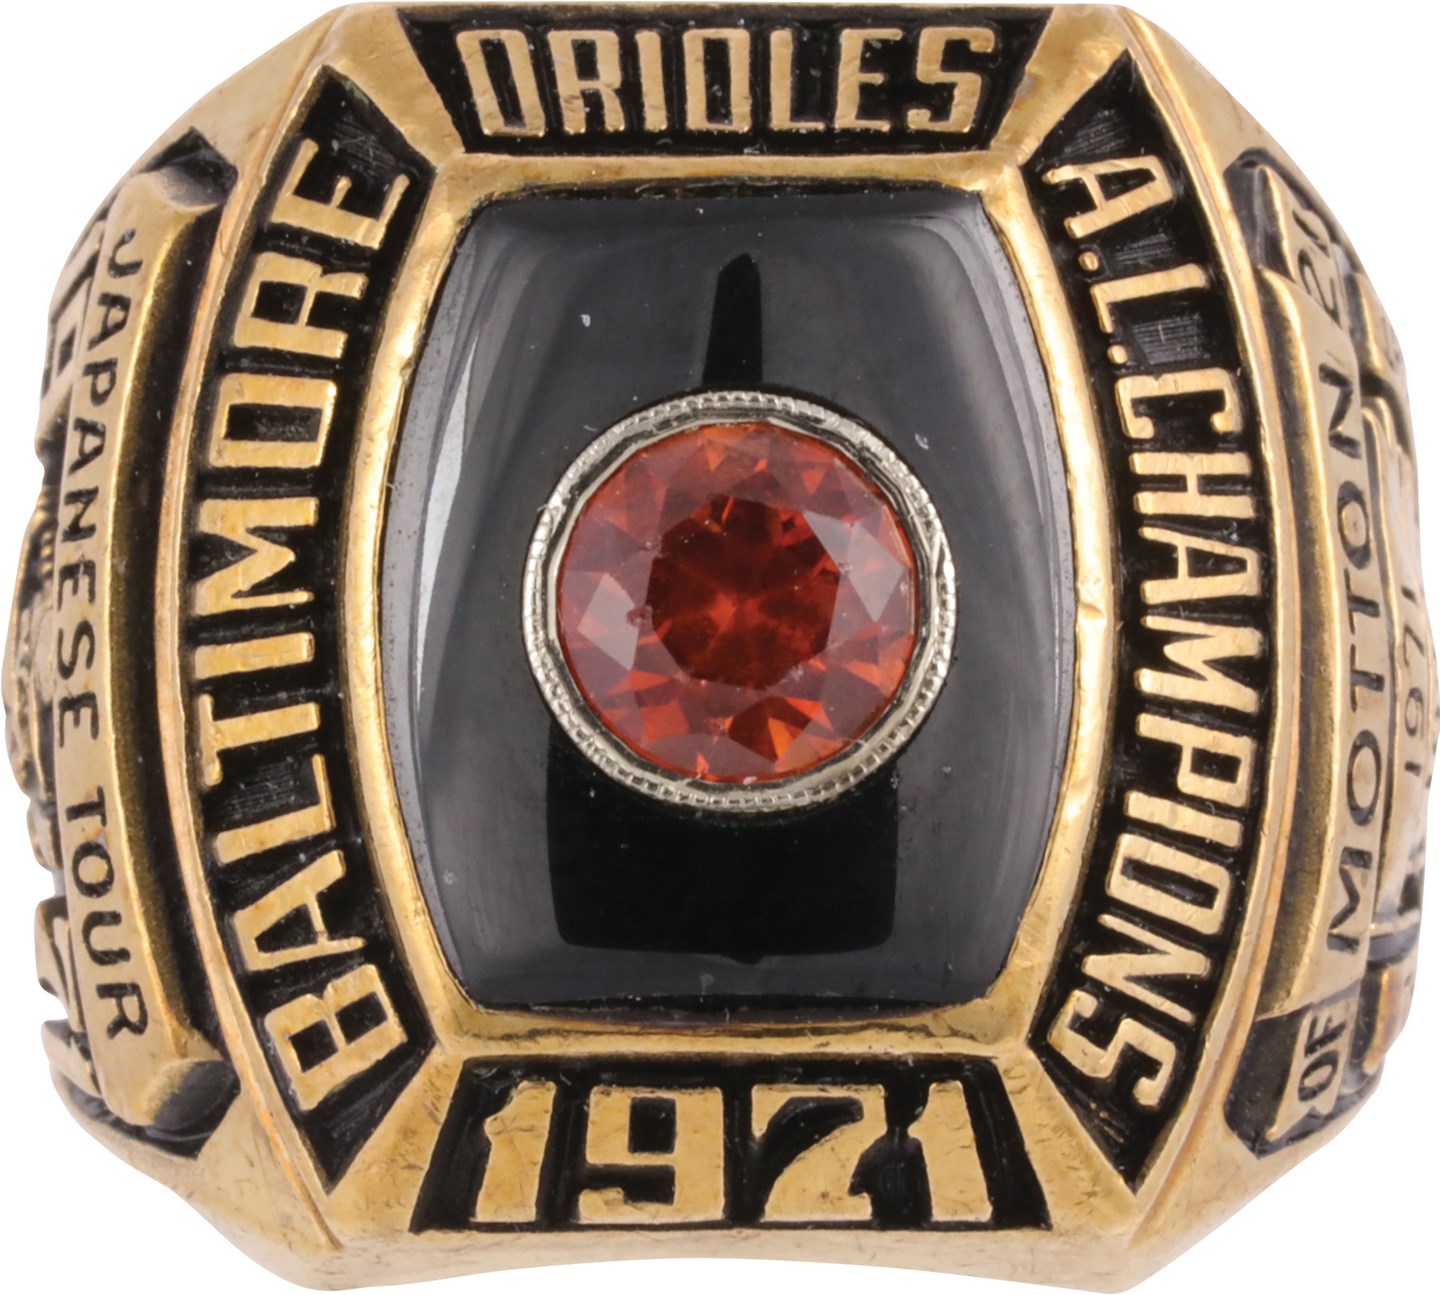 Baseball Awards - 1971 Curt Motton Baltimore Orioles American League Championship Player Ring